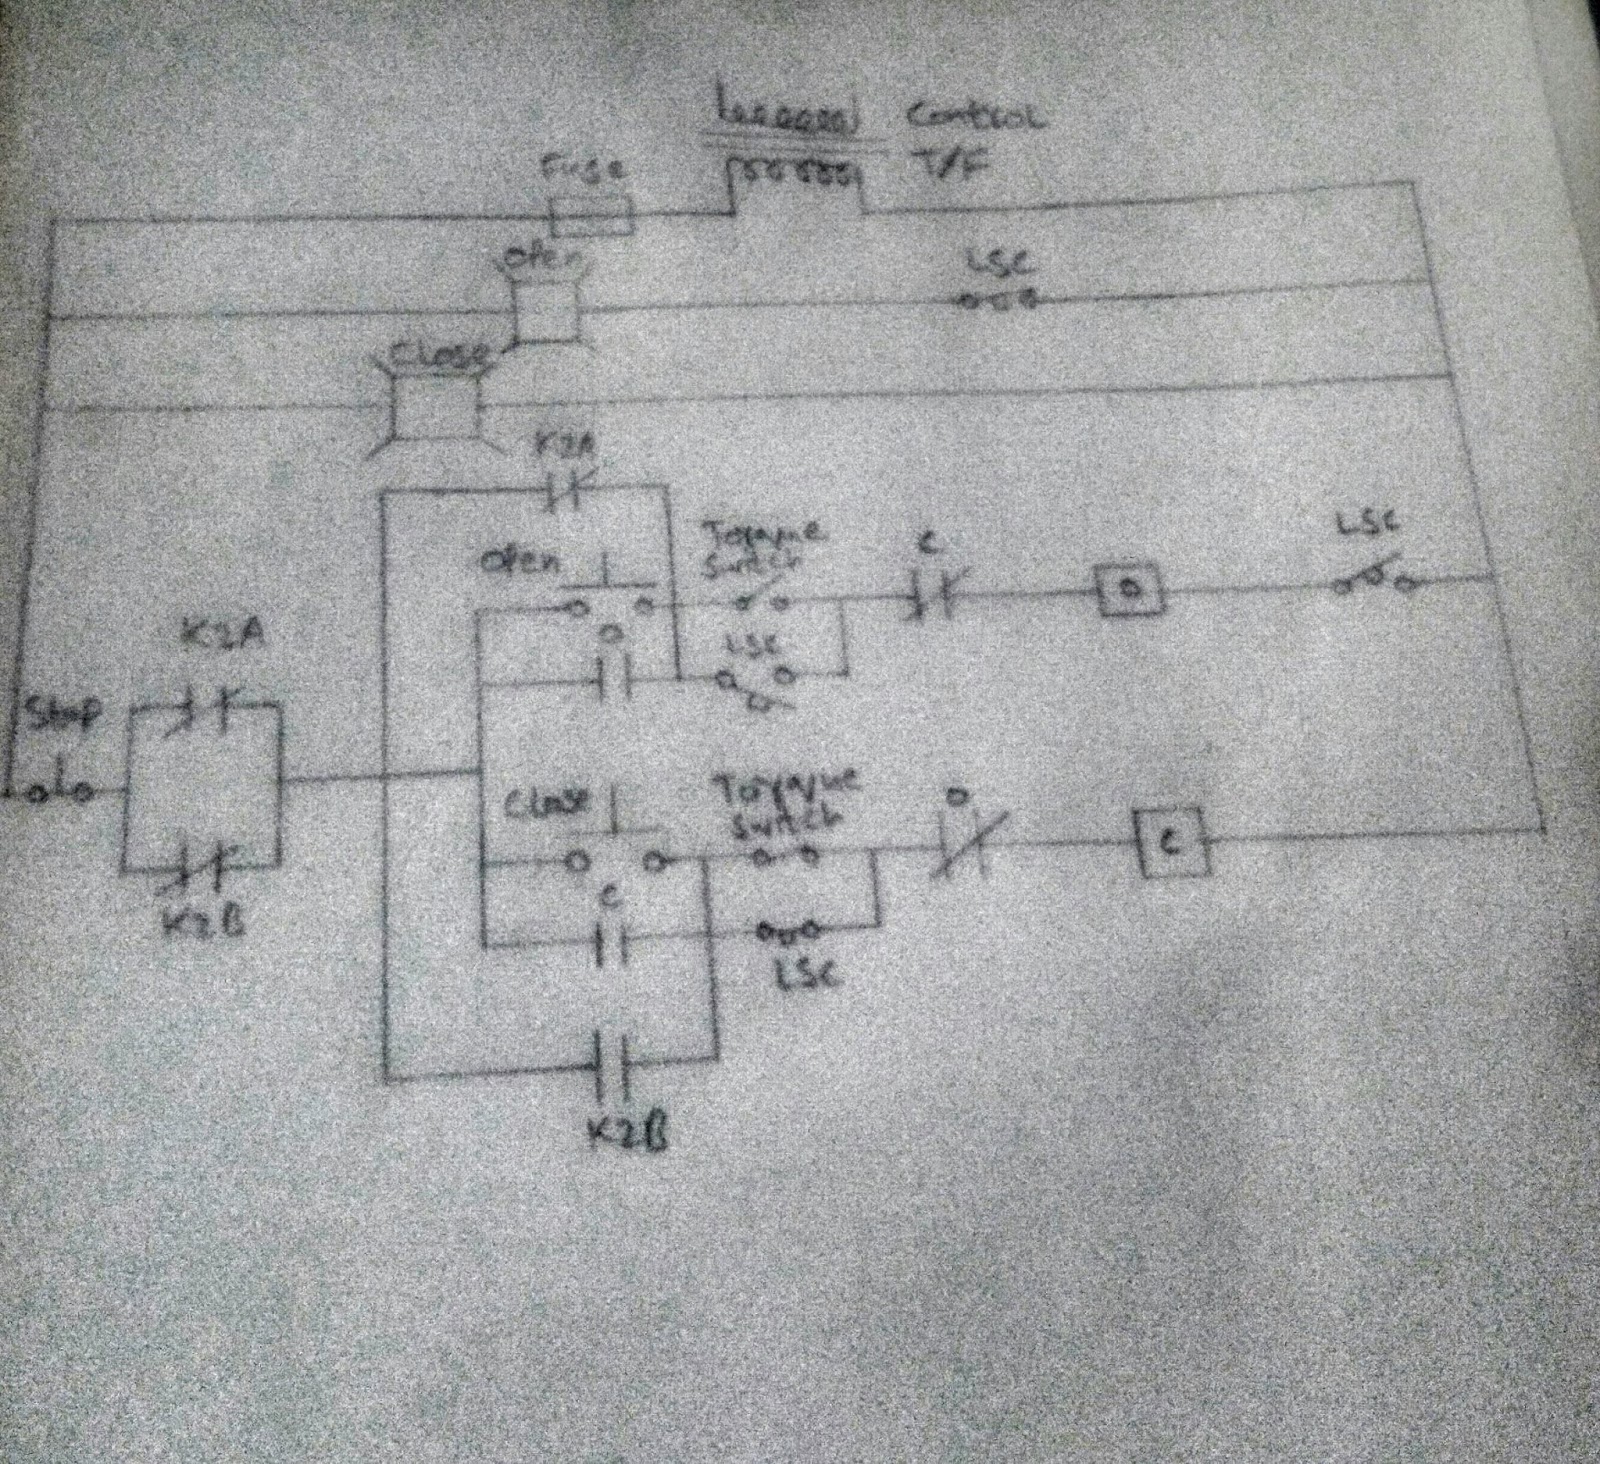 Circuit Diagram OF Motor Operated Valve